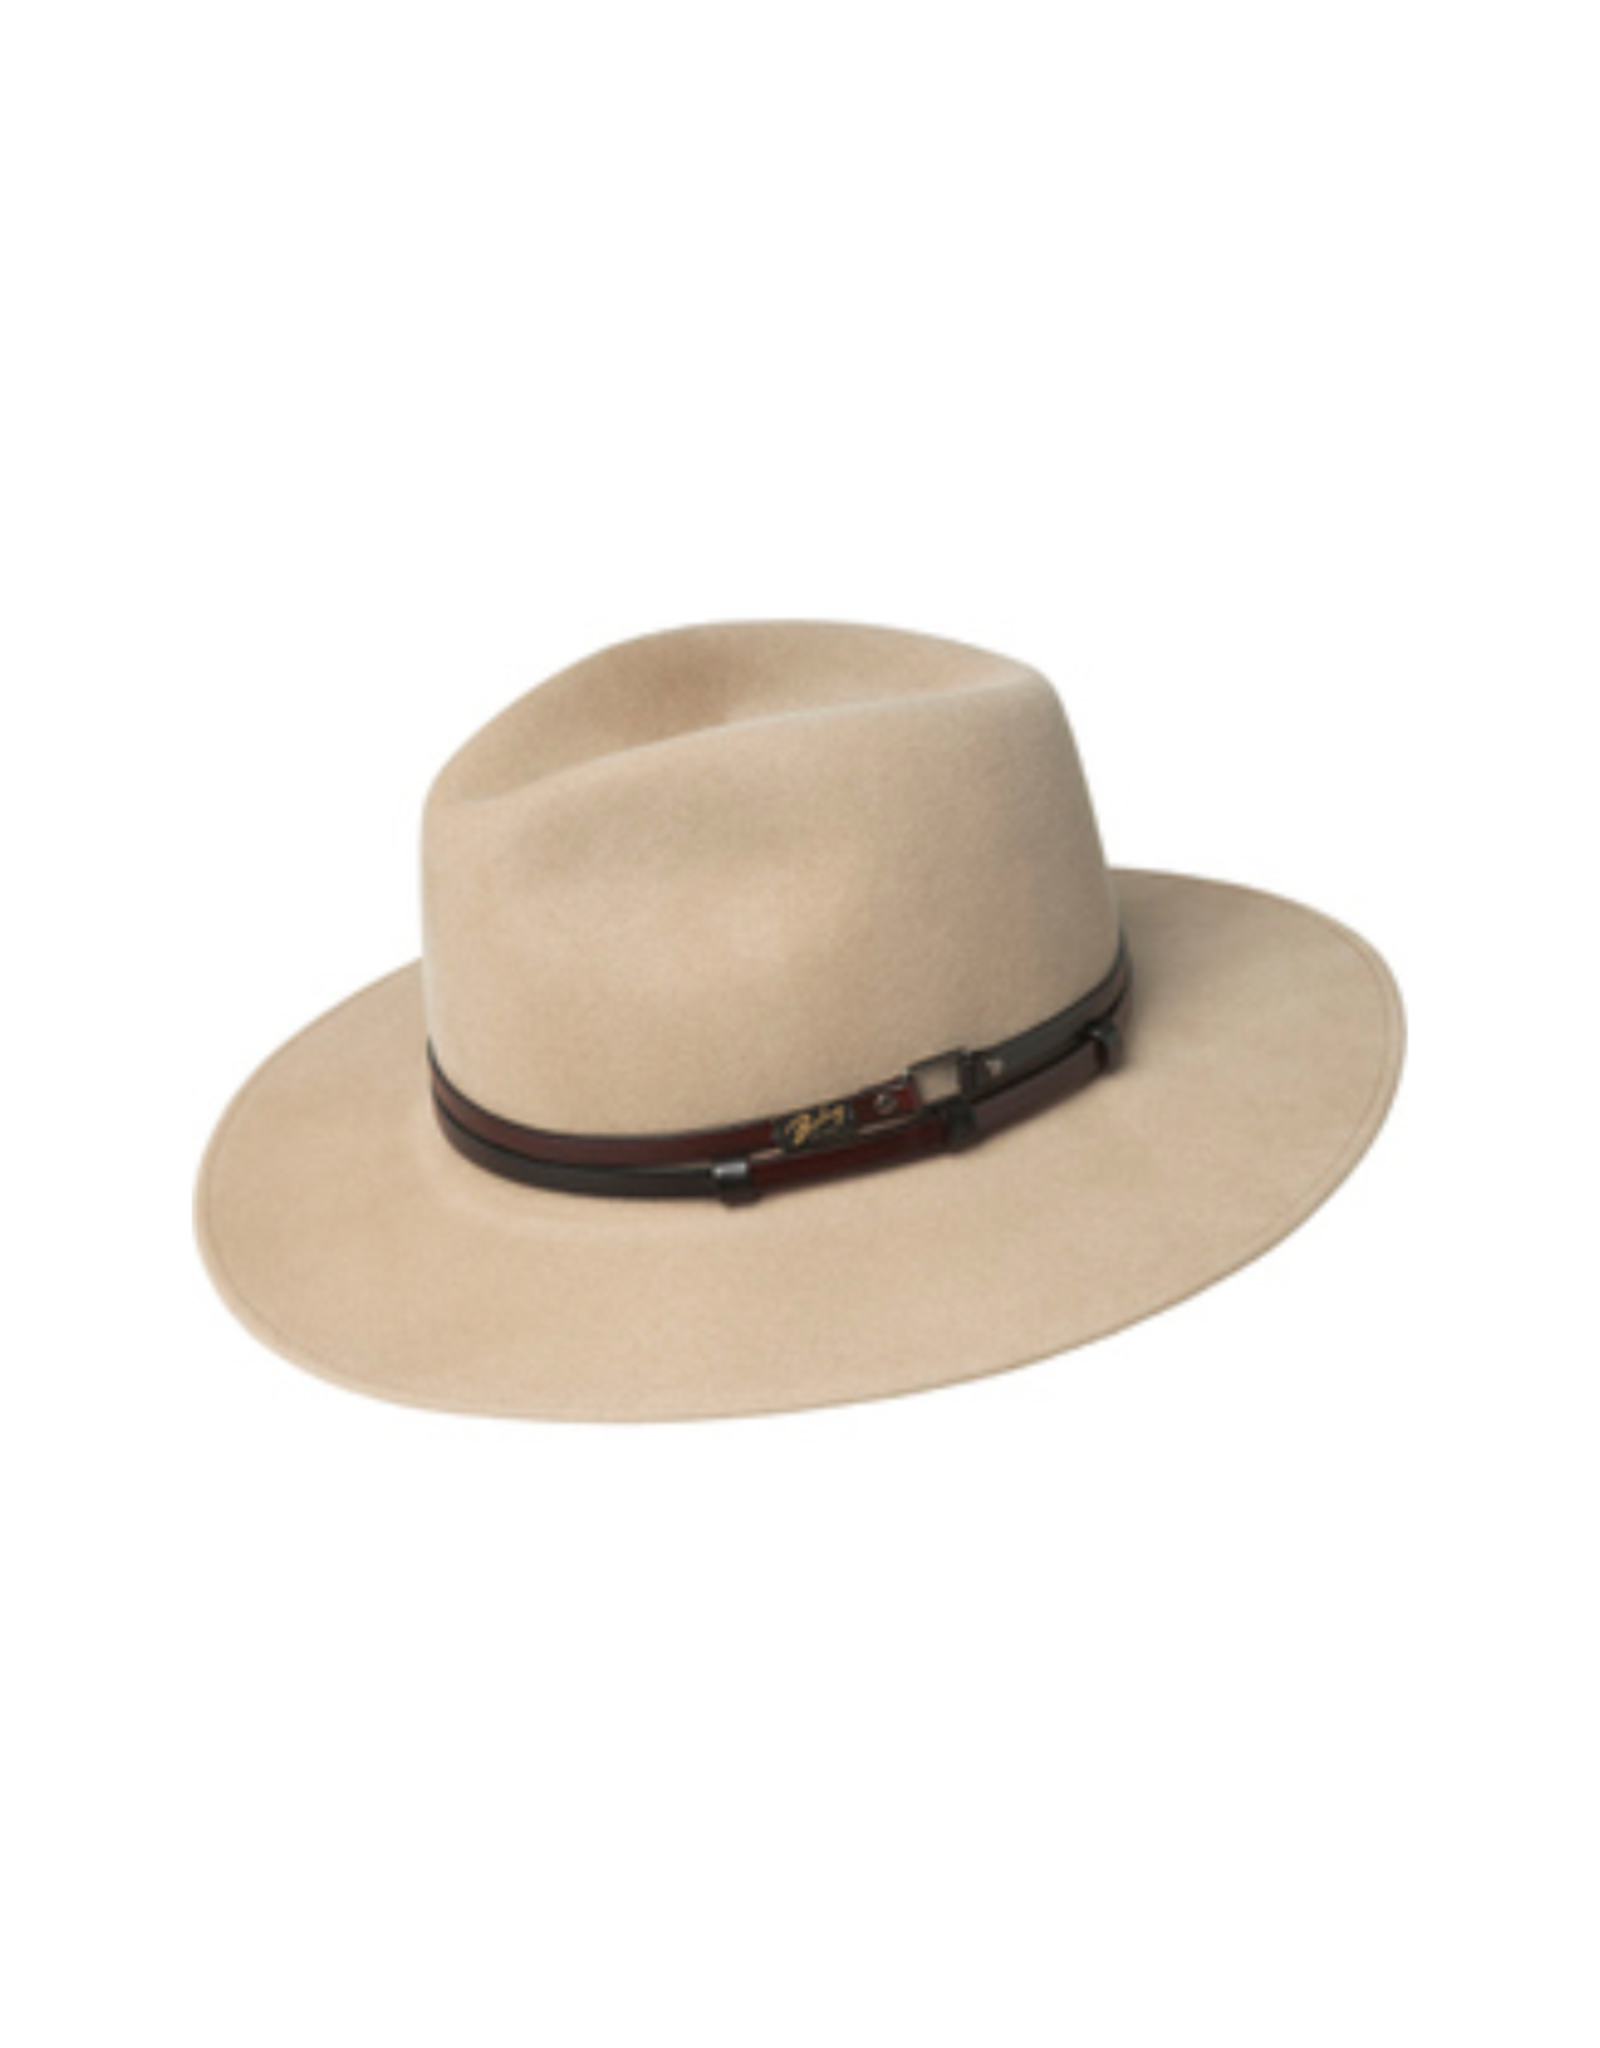 Bailey Hat Co. HAT-FEDORA "STEDMAN"